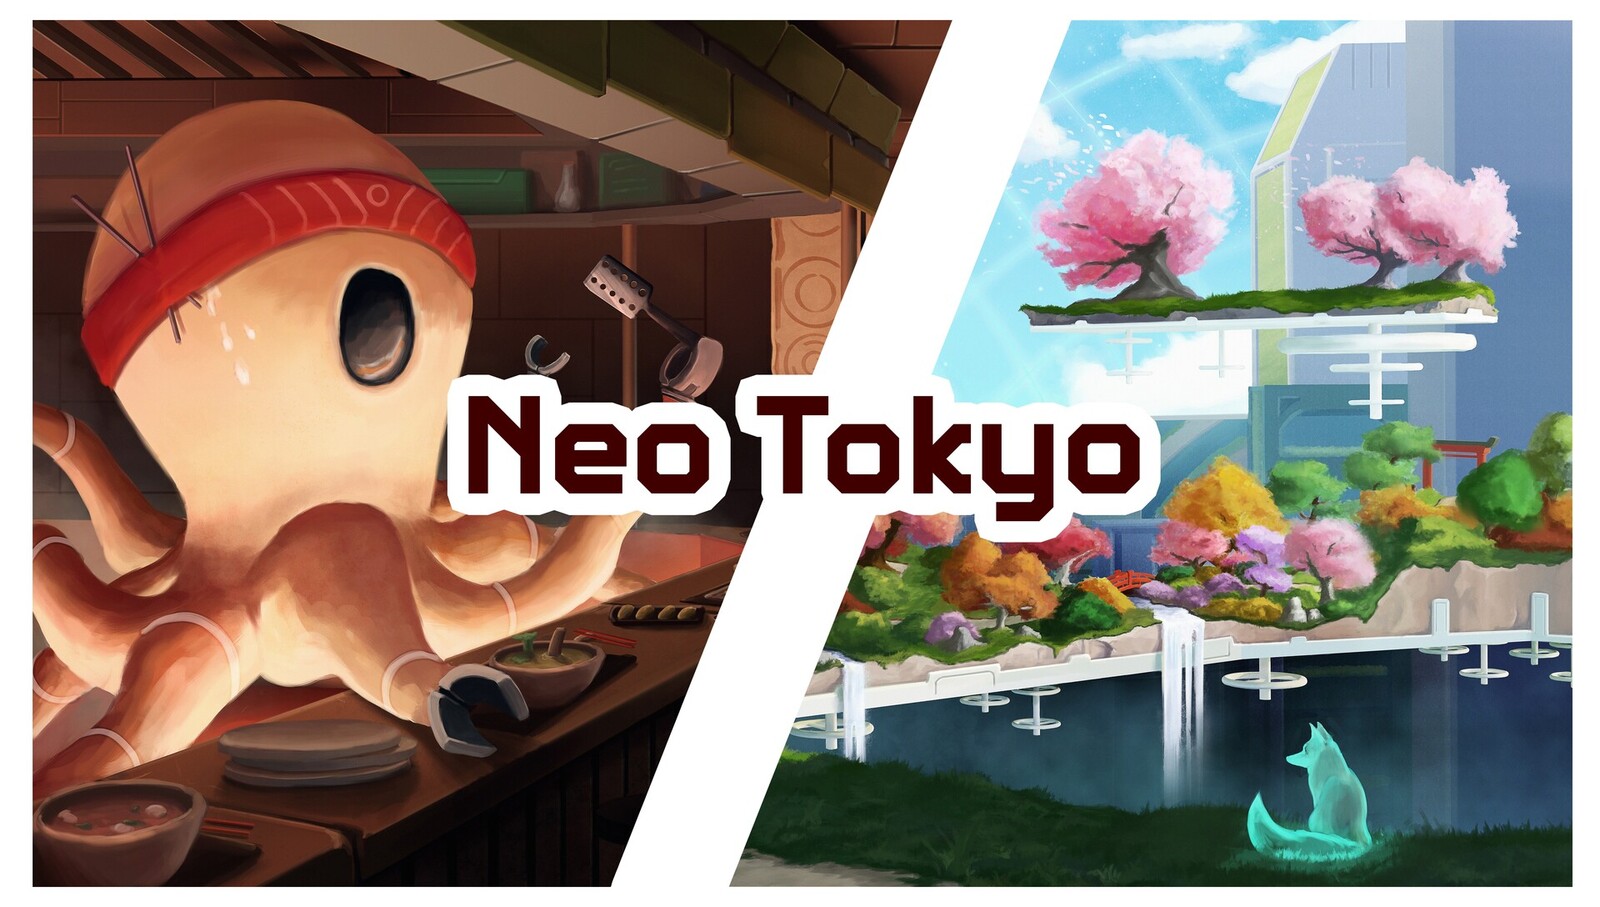 Neo Tokyo - ArtStation Challenge